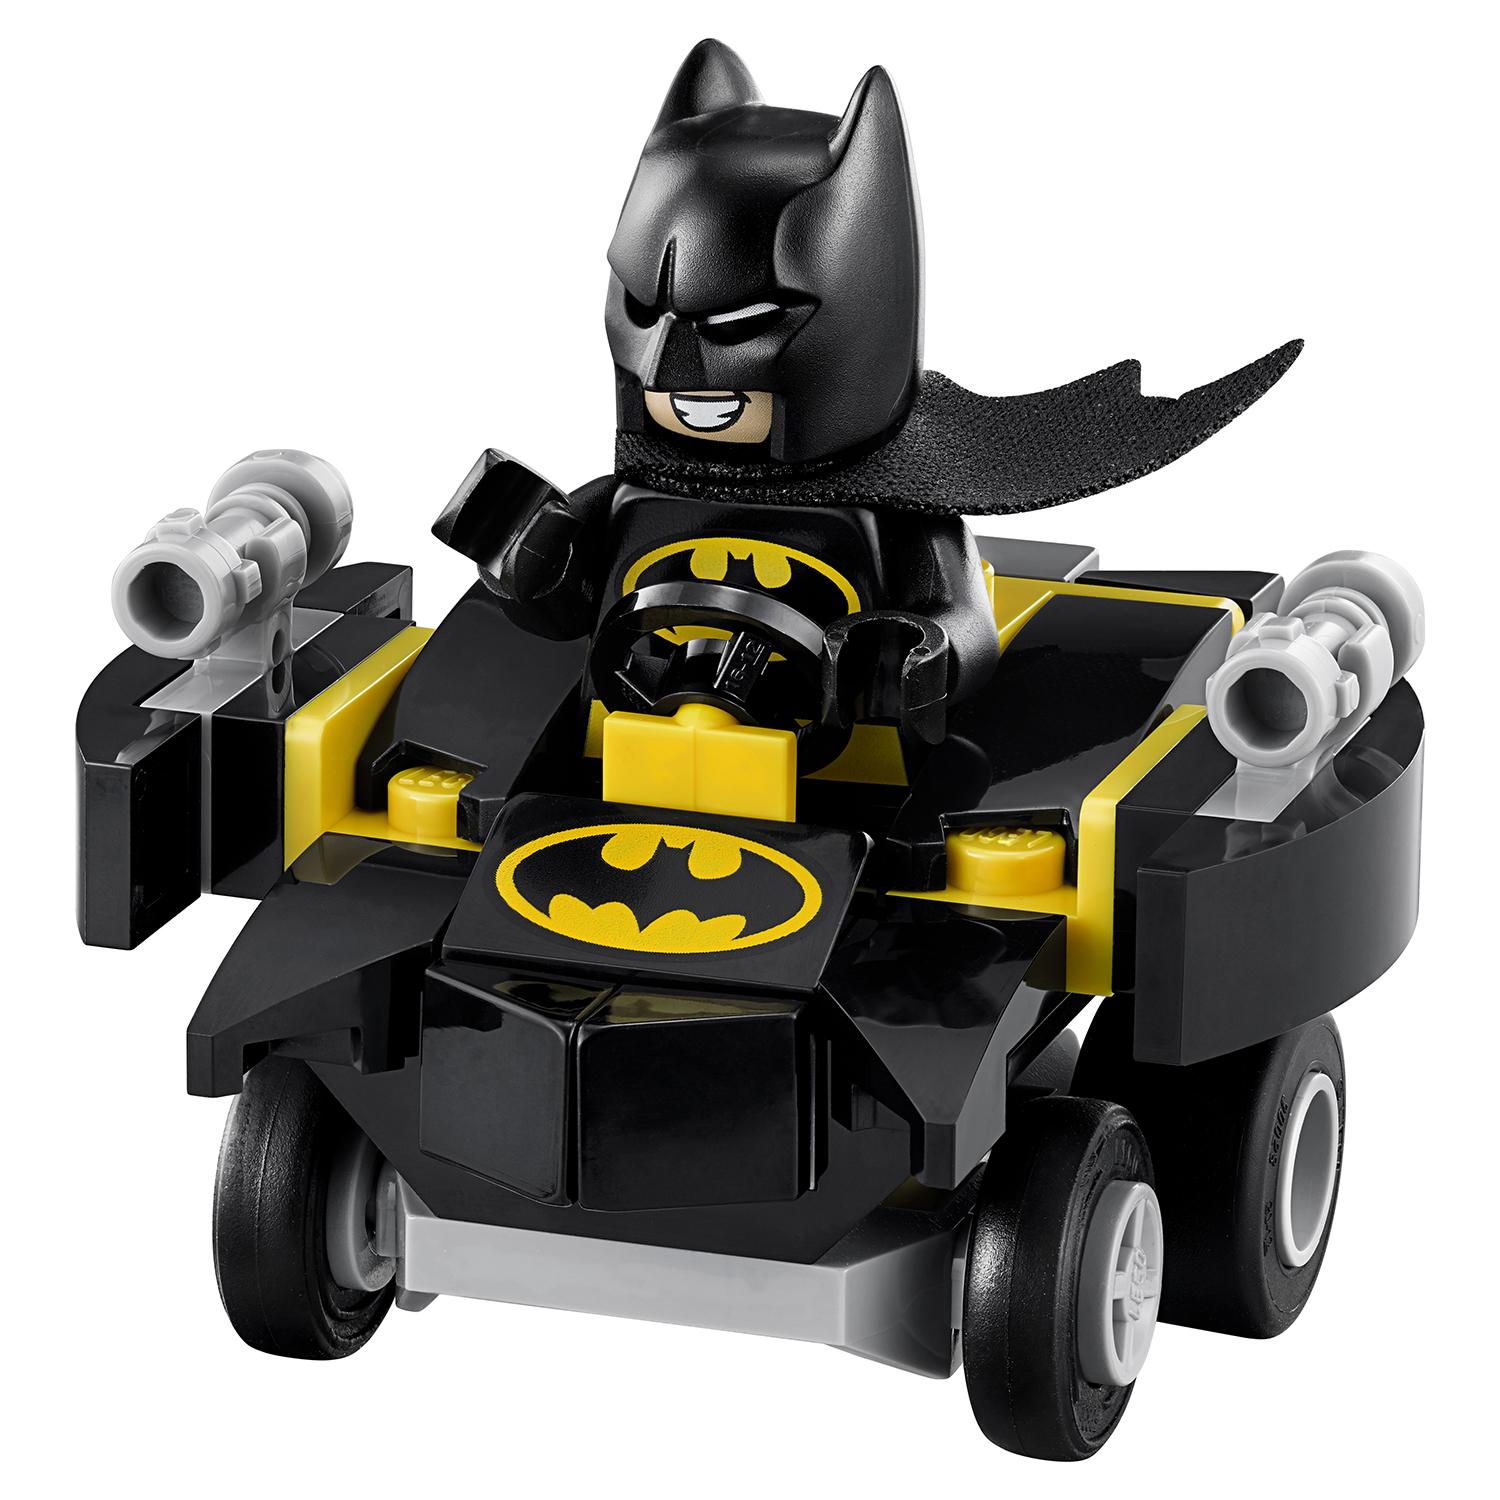 Lego Super Heroes 76092 Mighty Micros Бэтмен против Харли Квин